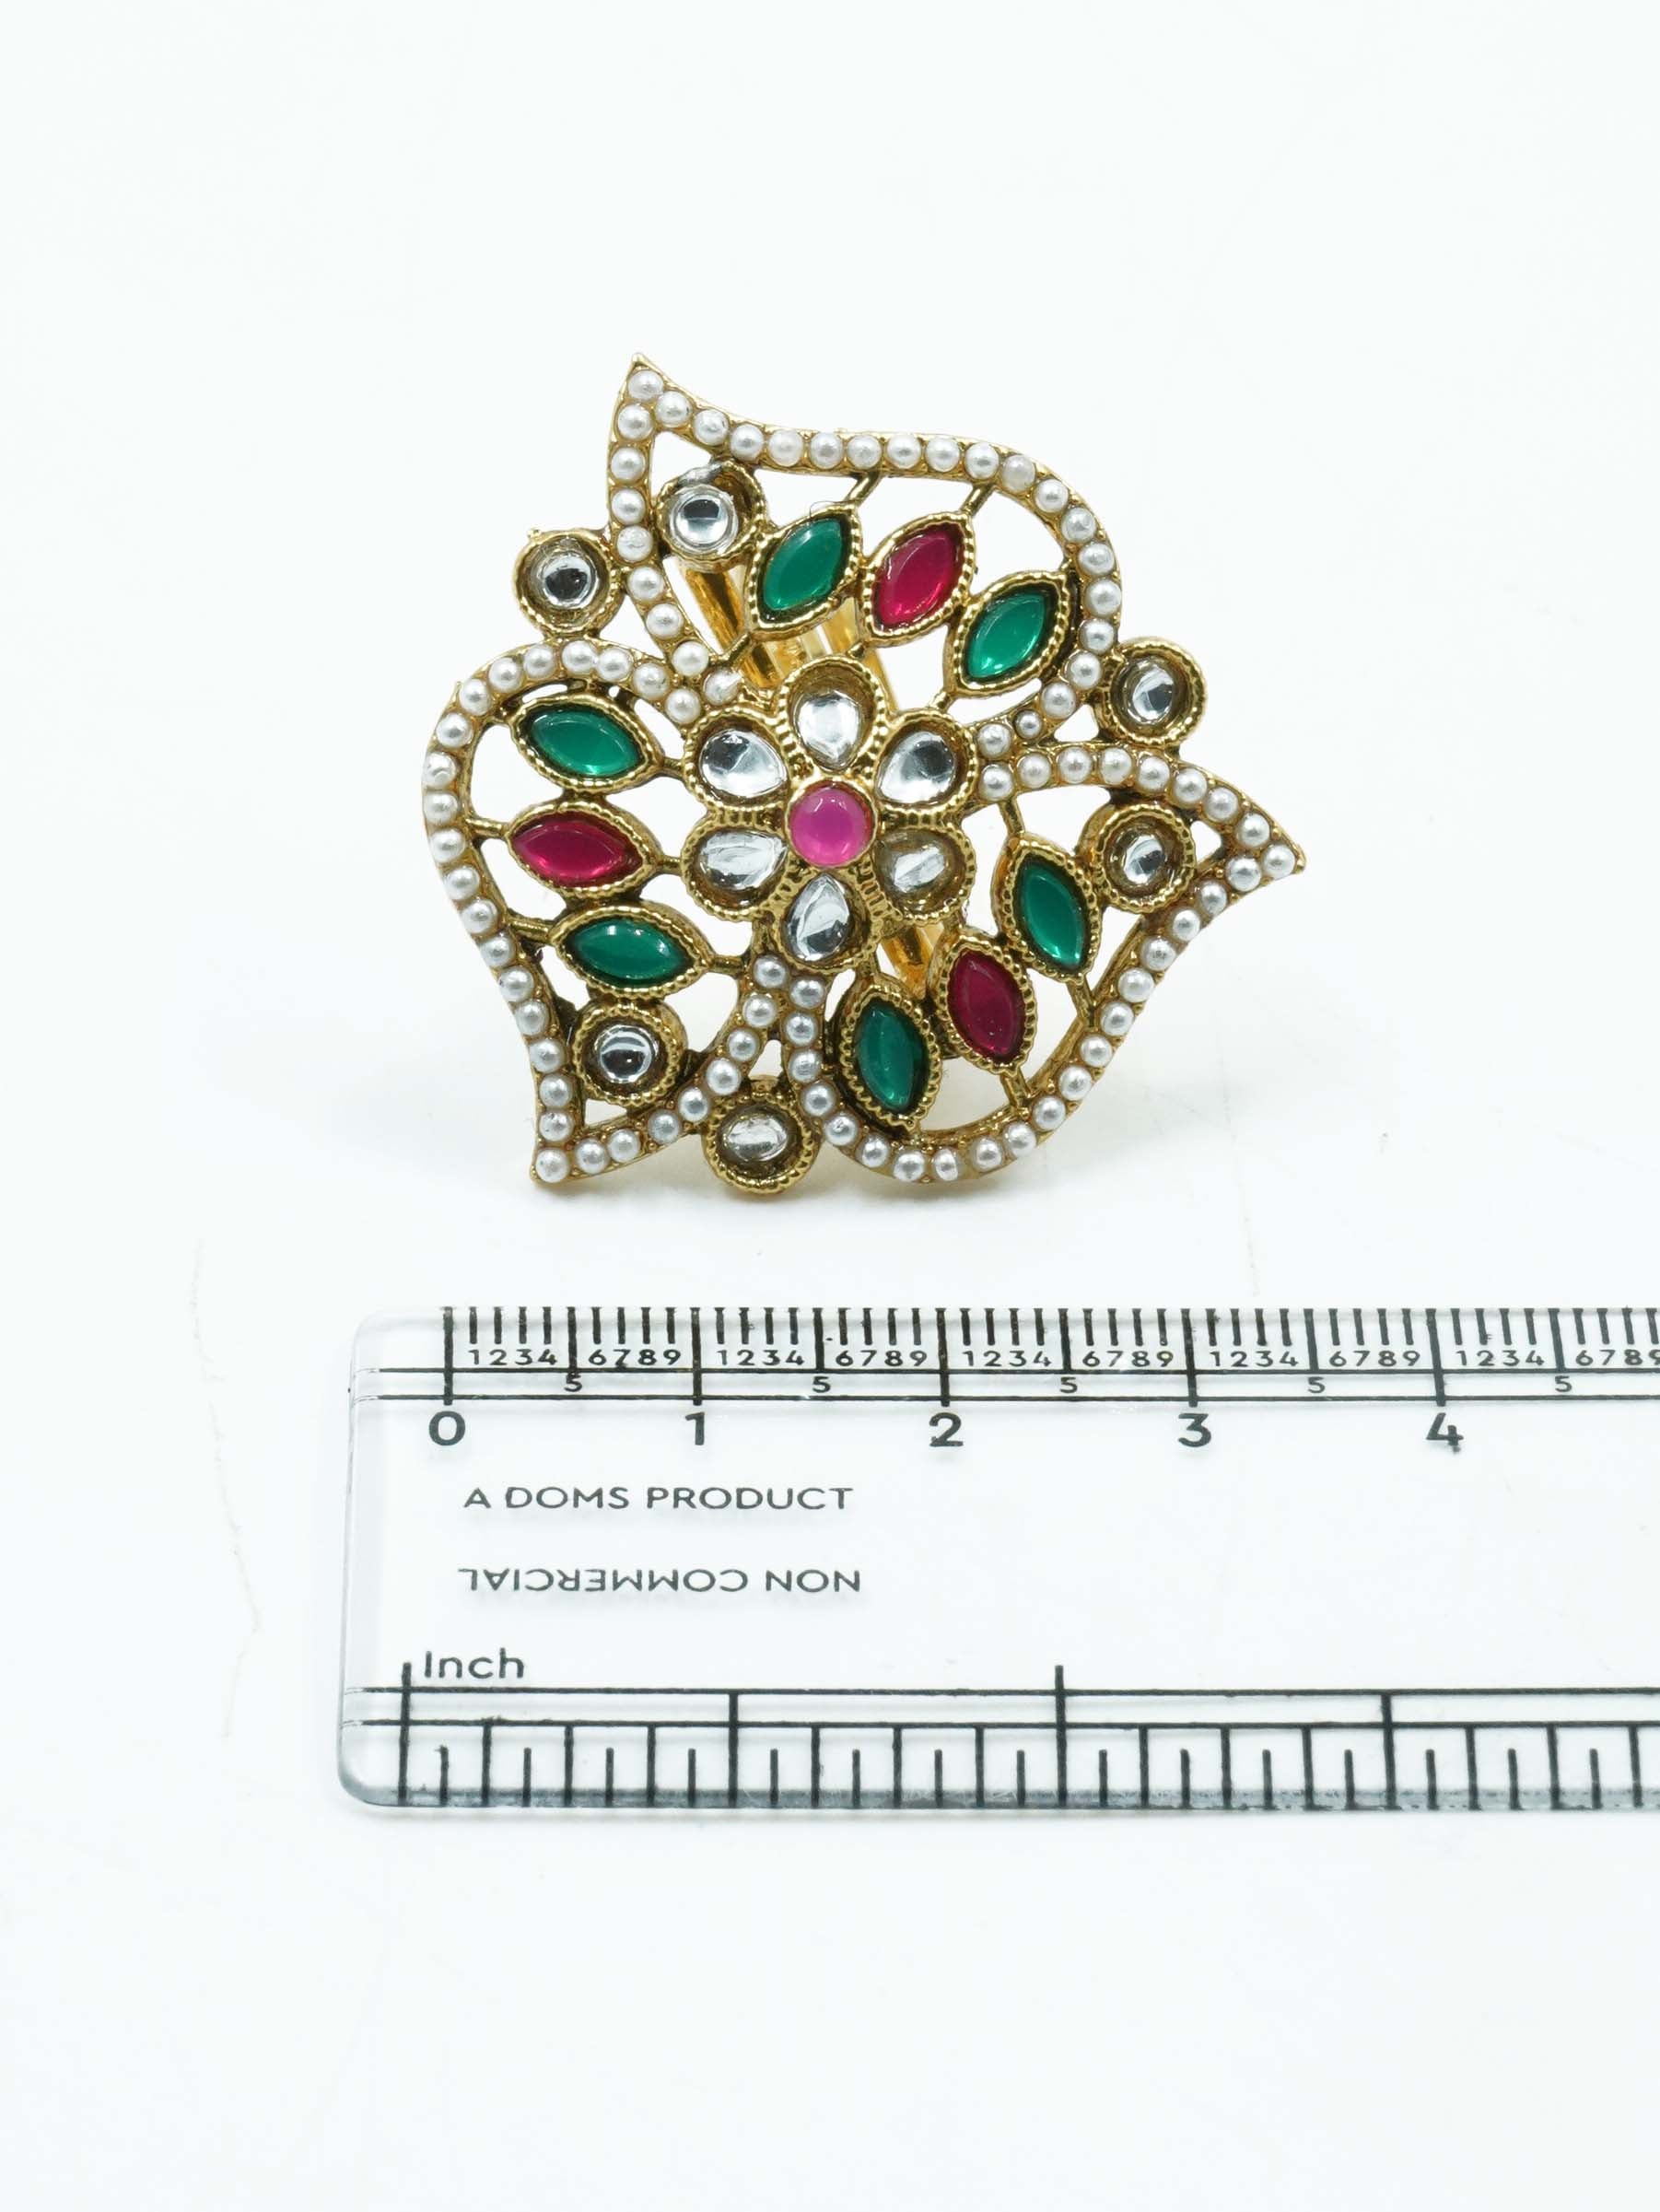 Antique Gold Plated Adjustable Size Designer Finger ring with Stones 10932N